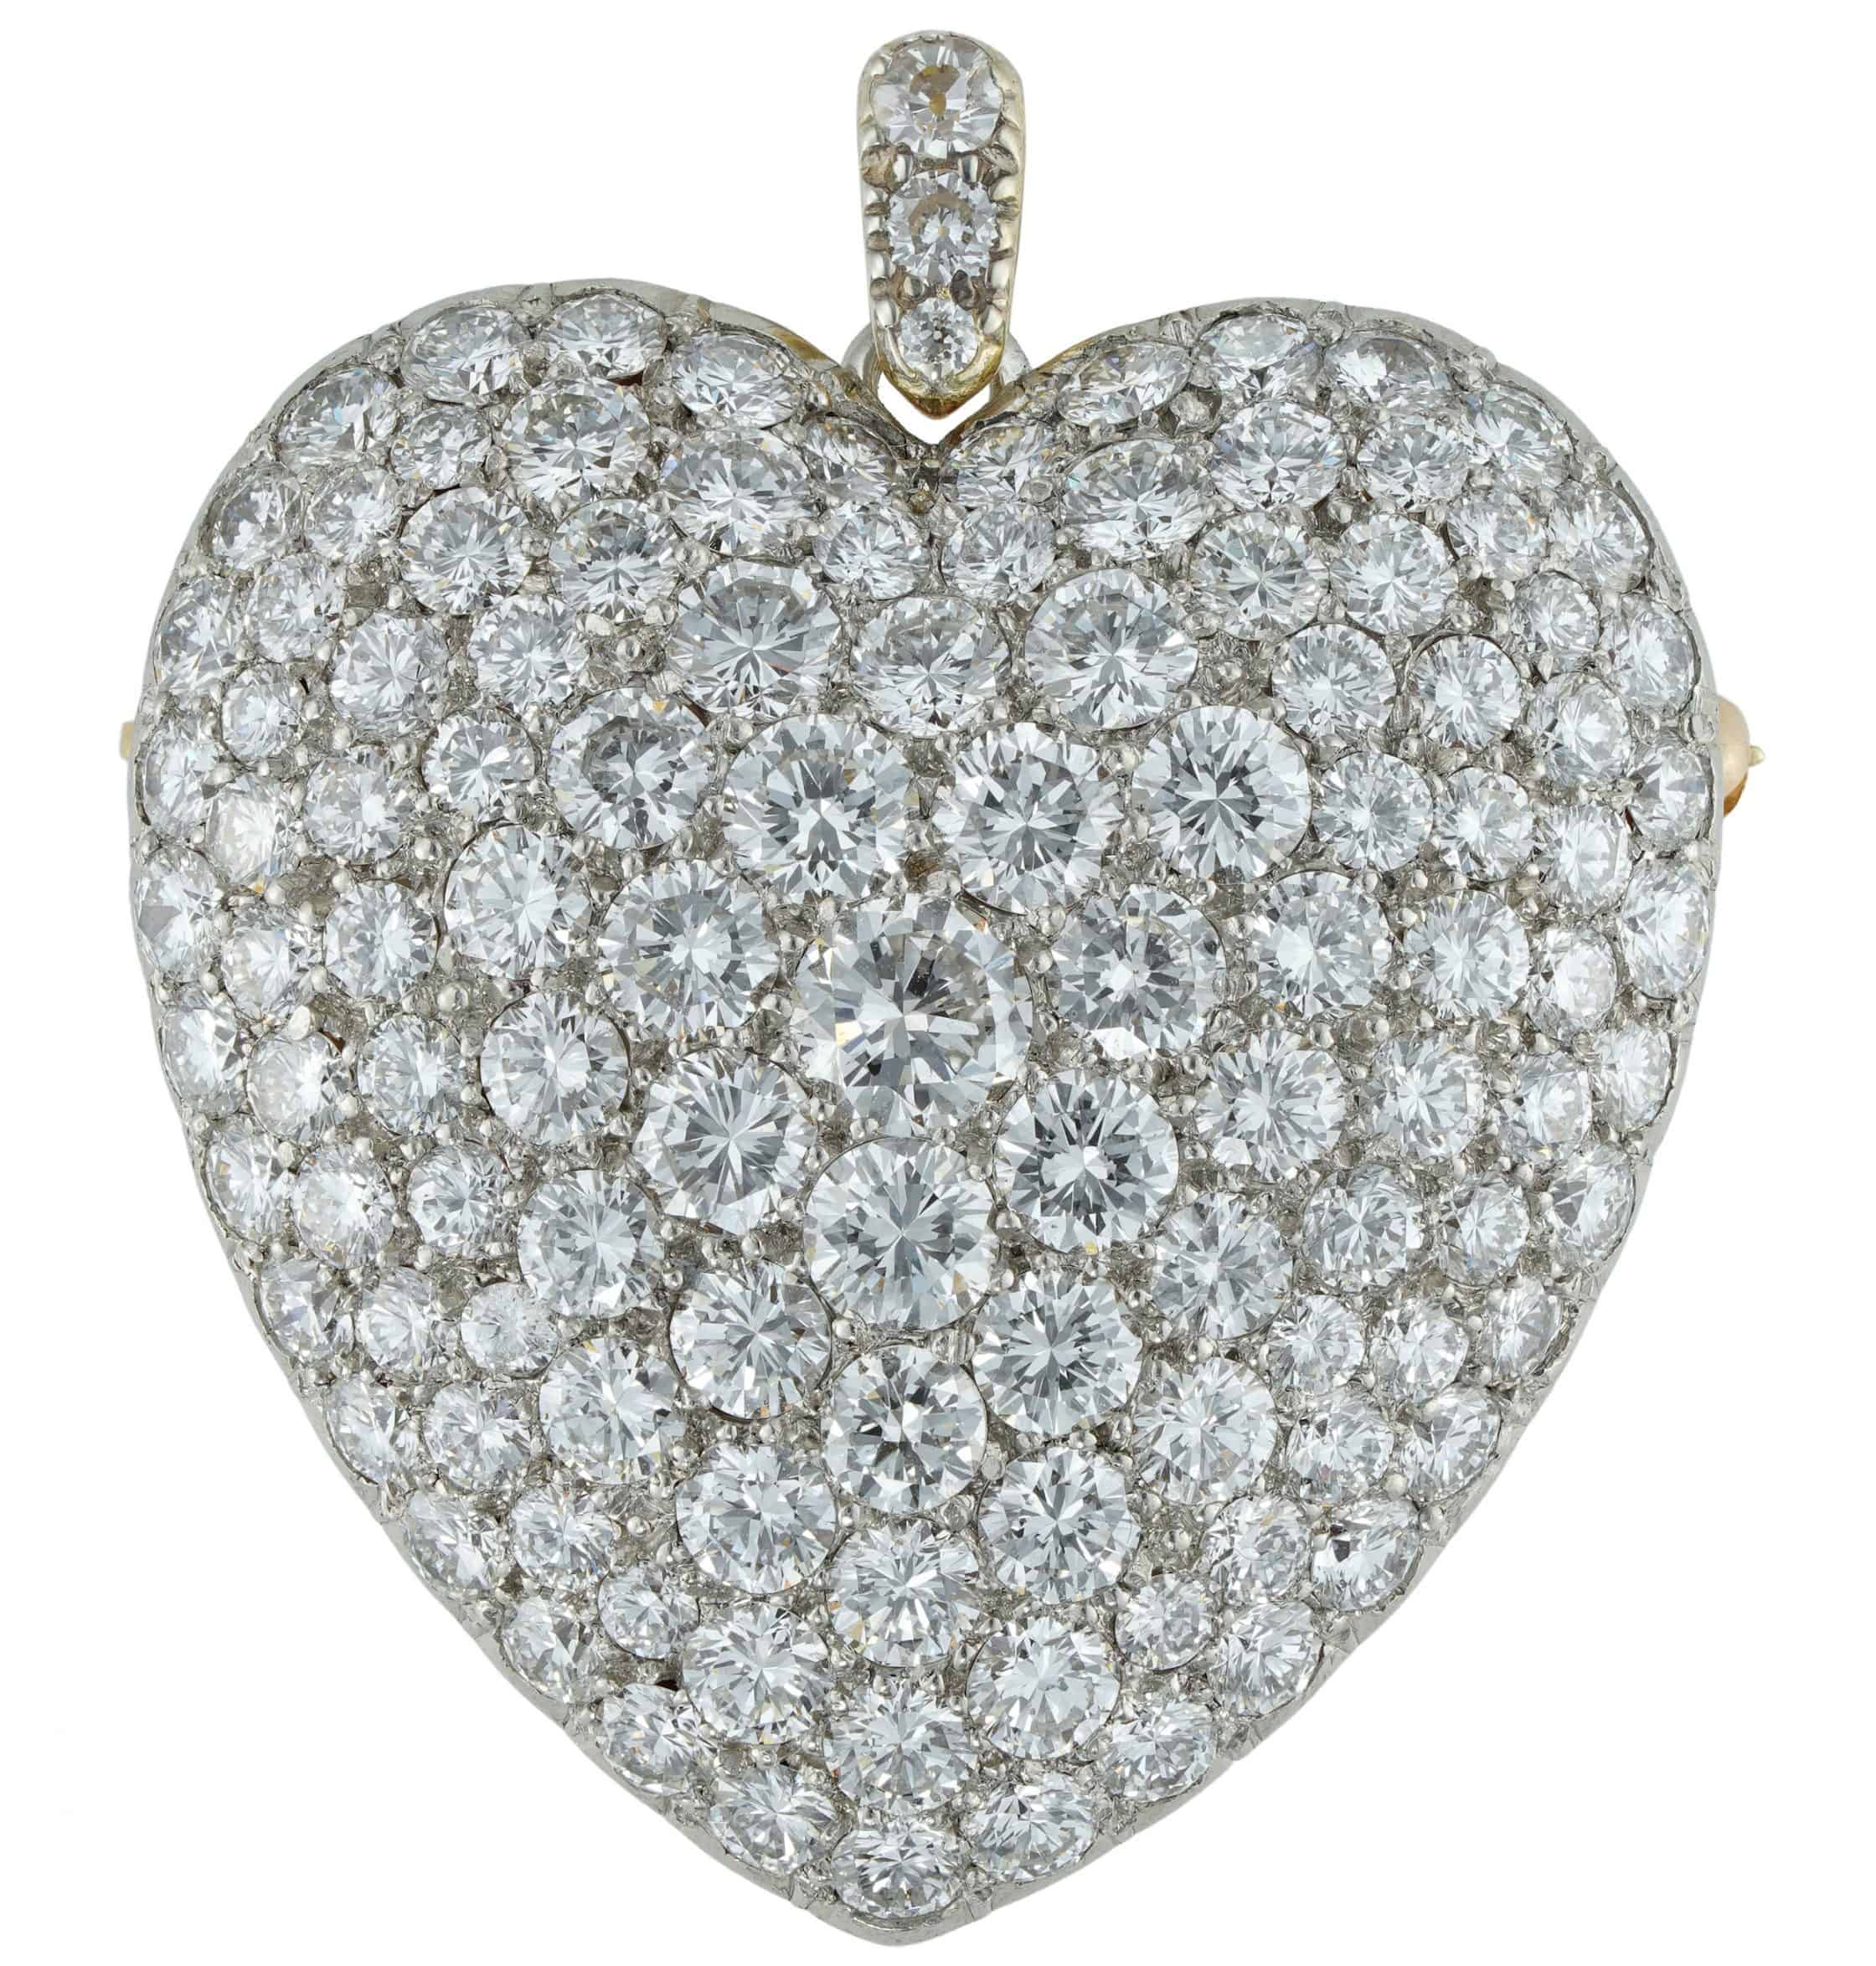 Diamond Set Heart Brooch Pendant